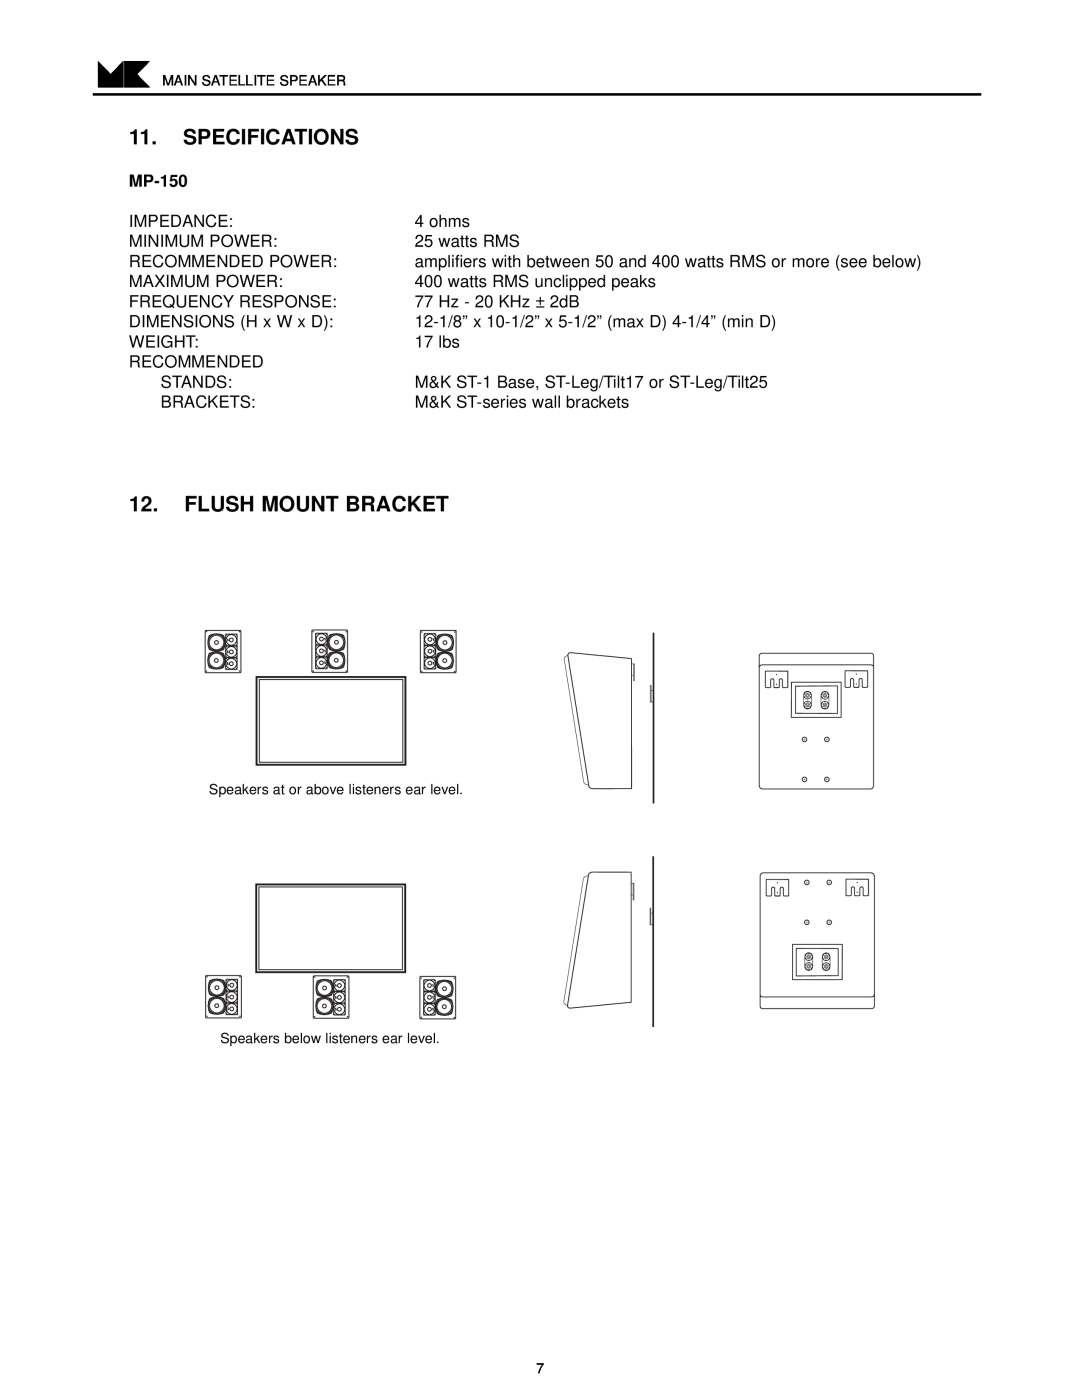 MK Sound MP-150 operation manual Specifications, Flush Mount Bracket 